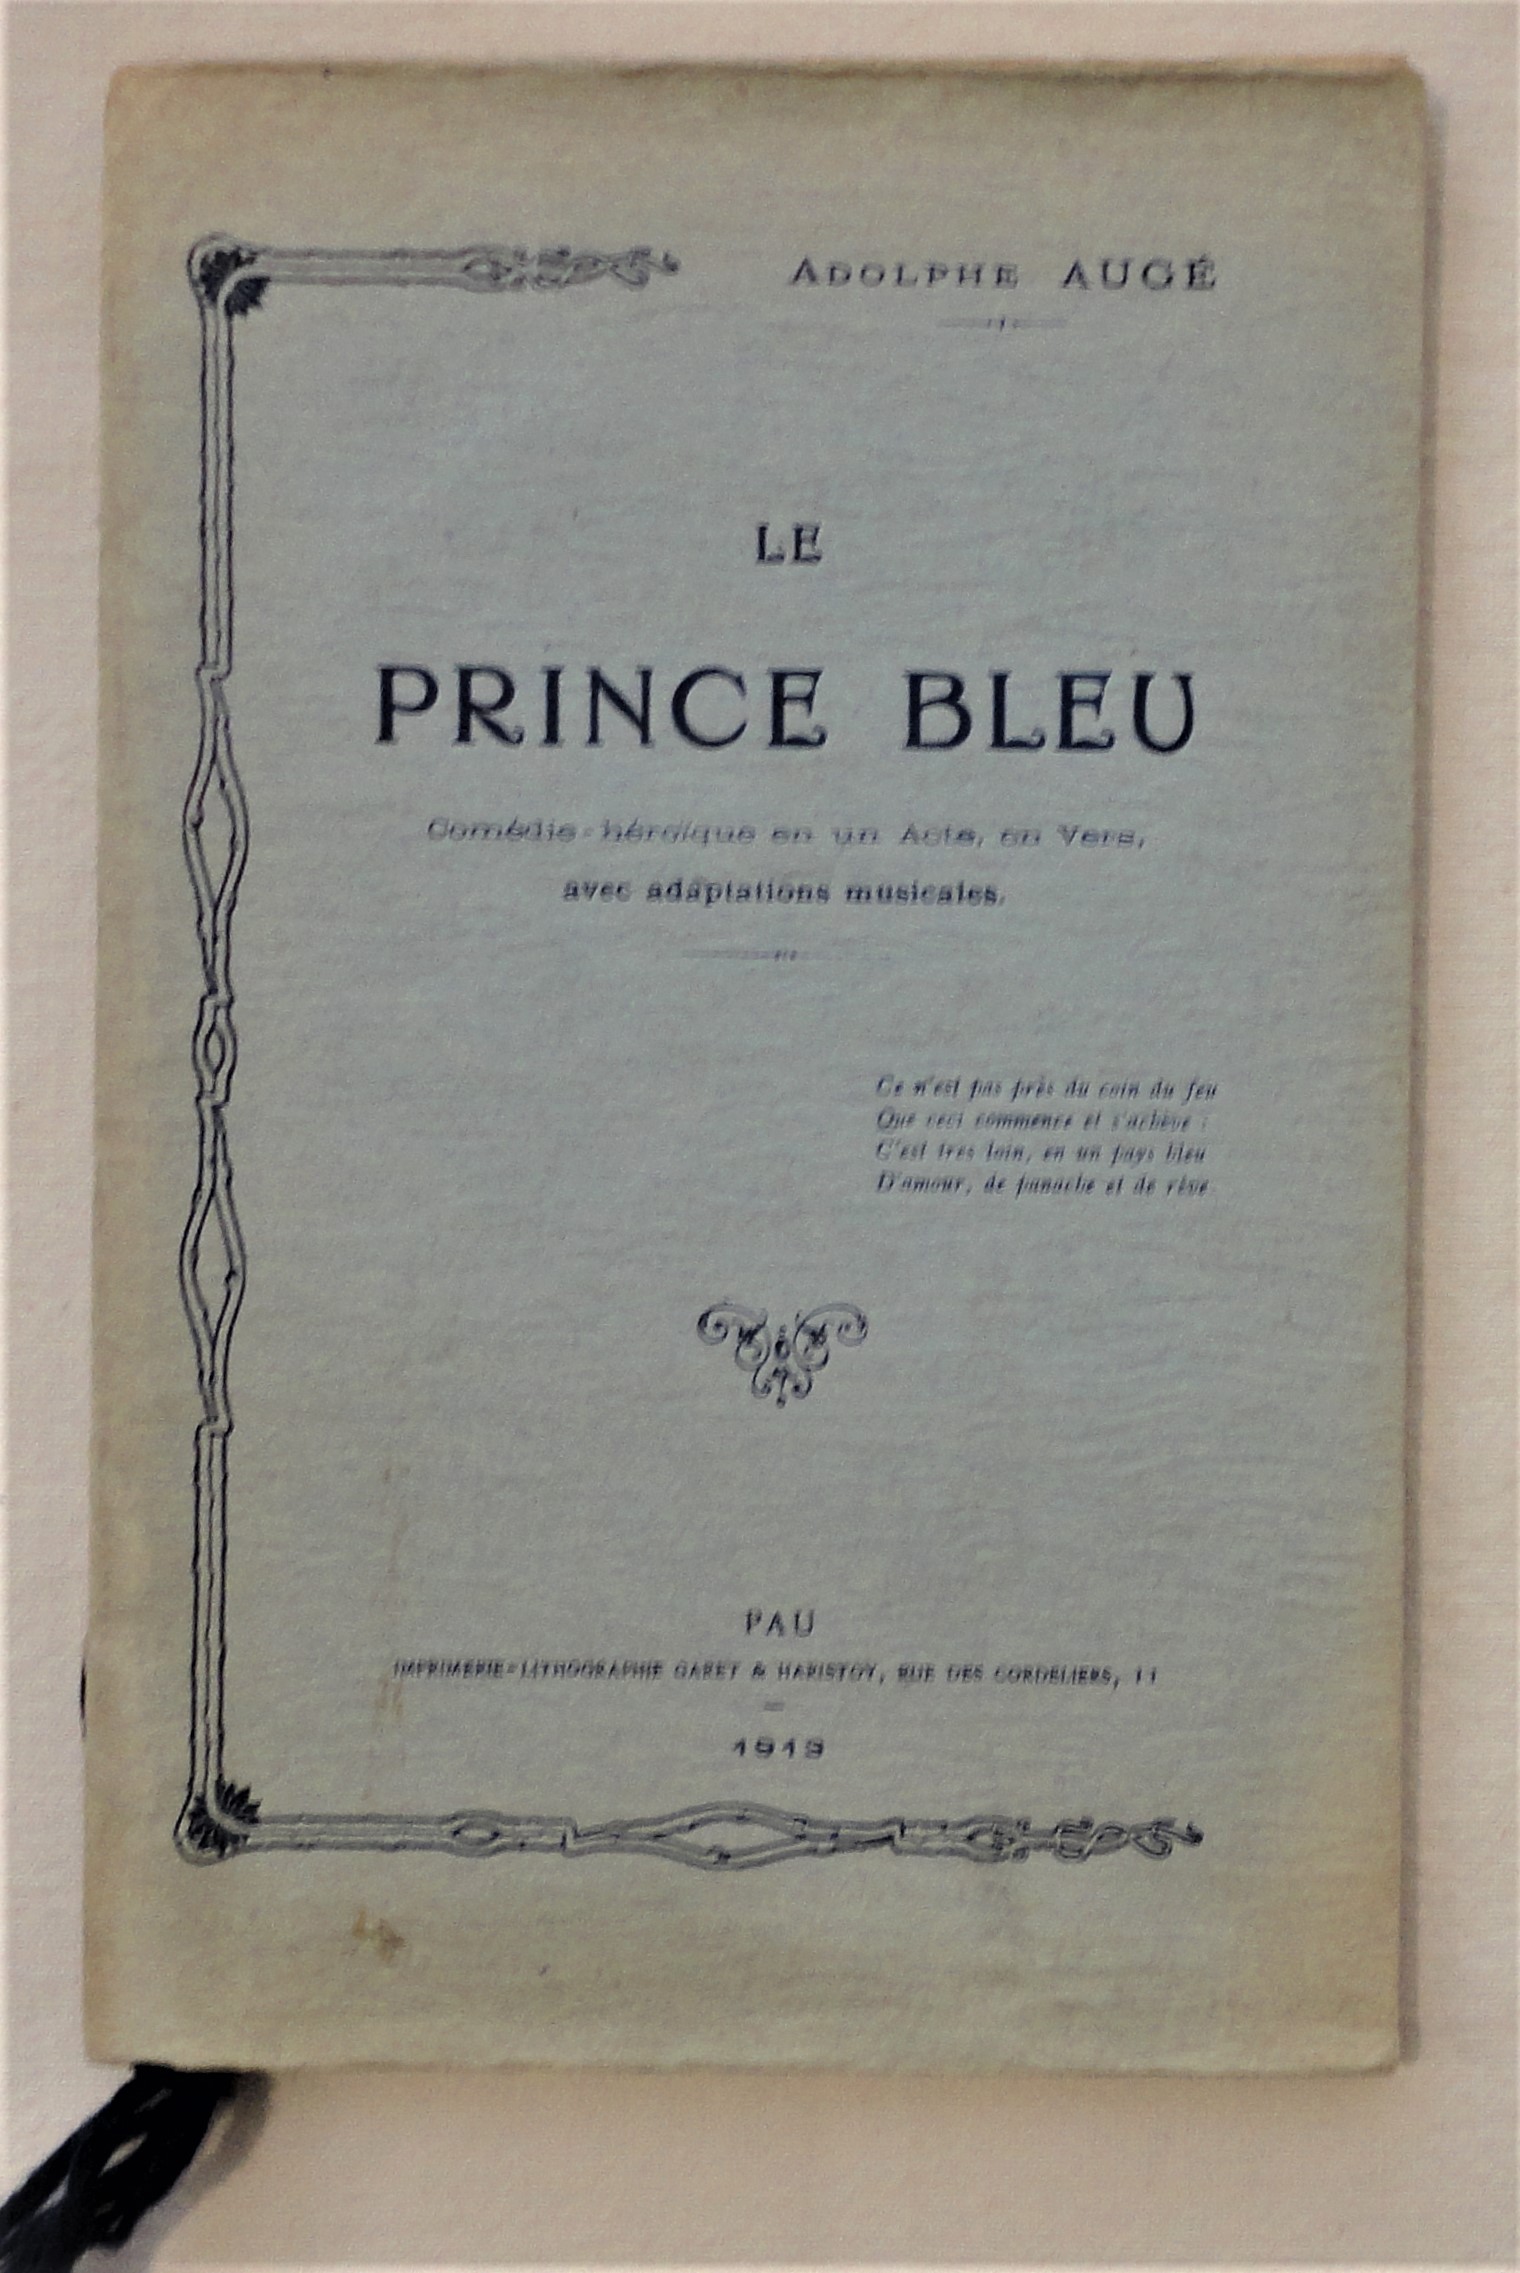 AUGE (Adolphe). - Le prince bleu.